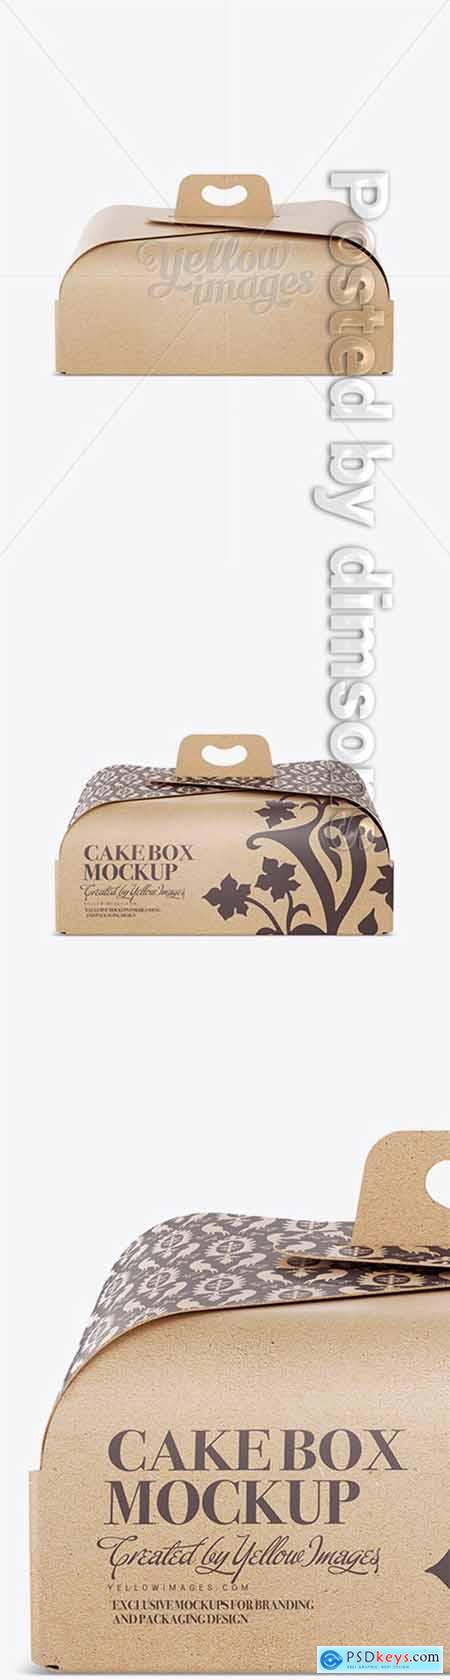 Download Carton Cake Box Mockup - Front View 14773 » Free Download ...